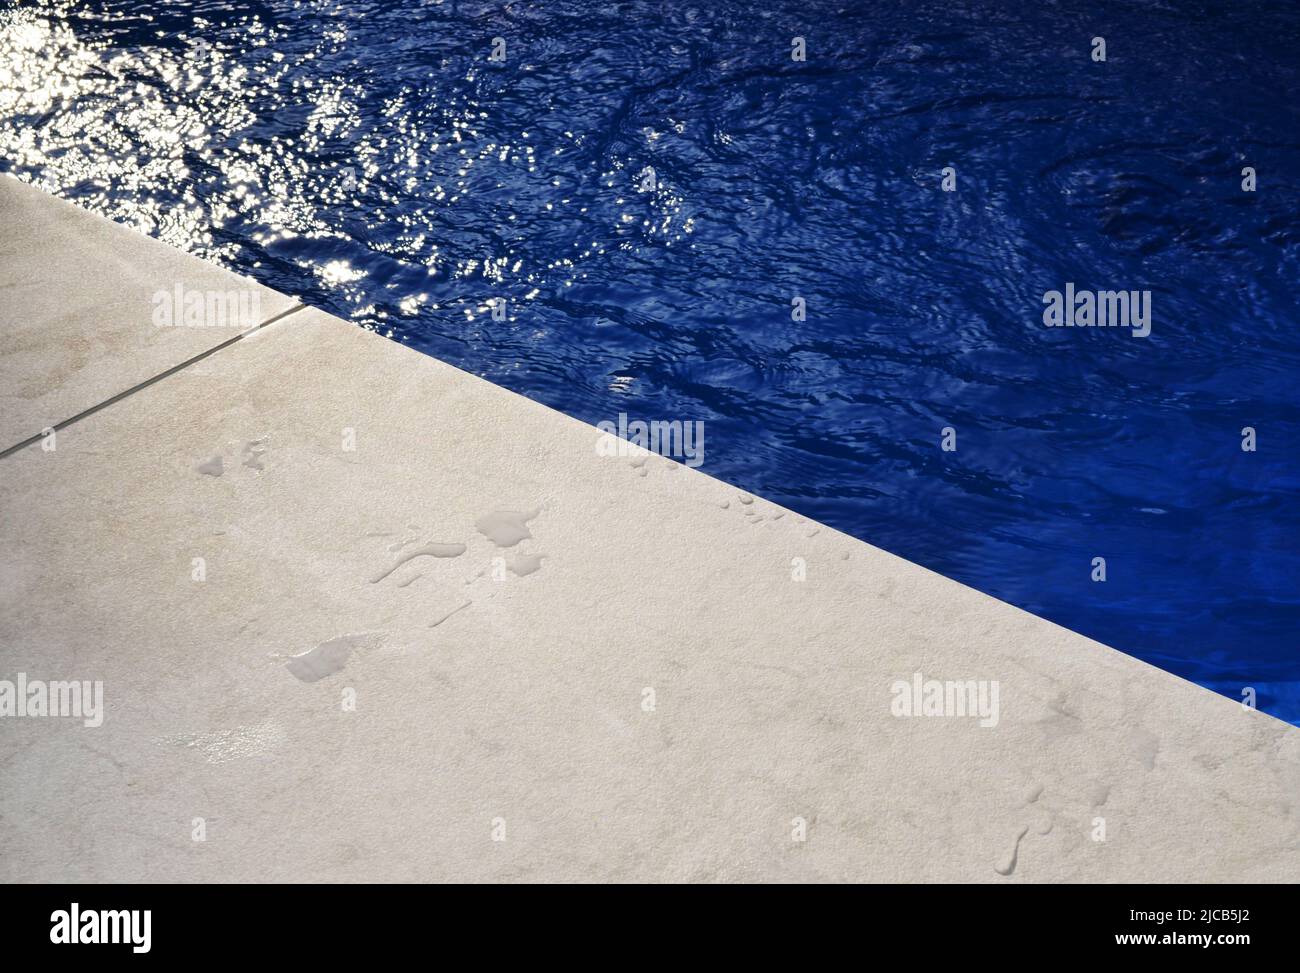 Edge of swimming pool blue water grey paving Stock Photo